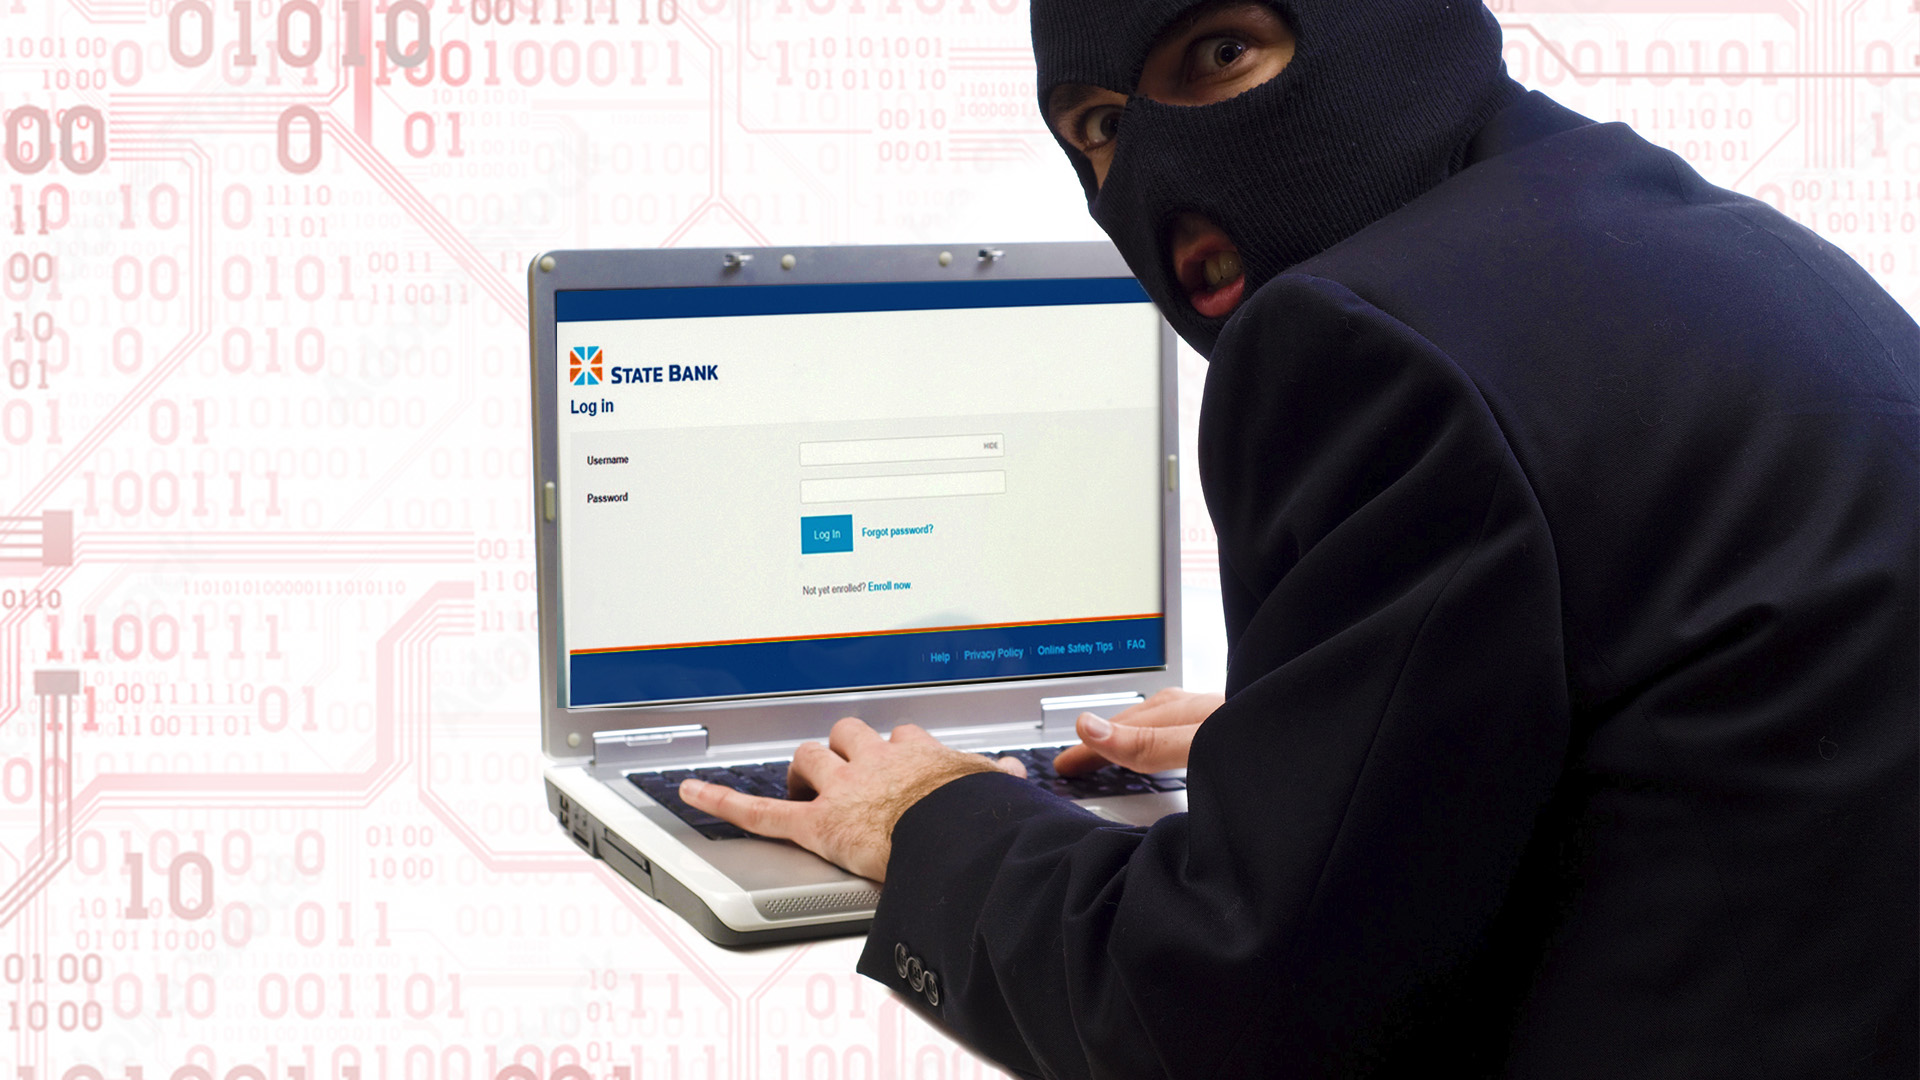 I Criminali informatici usano falsi profili